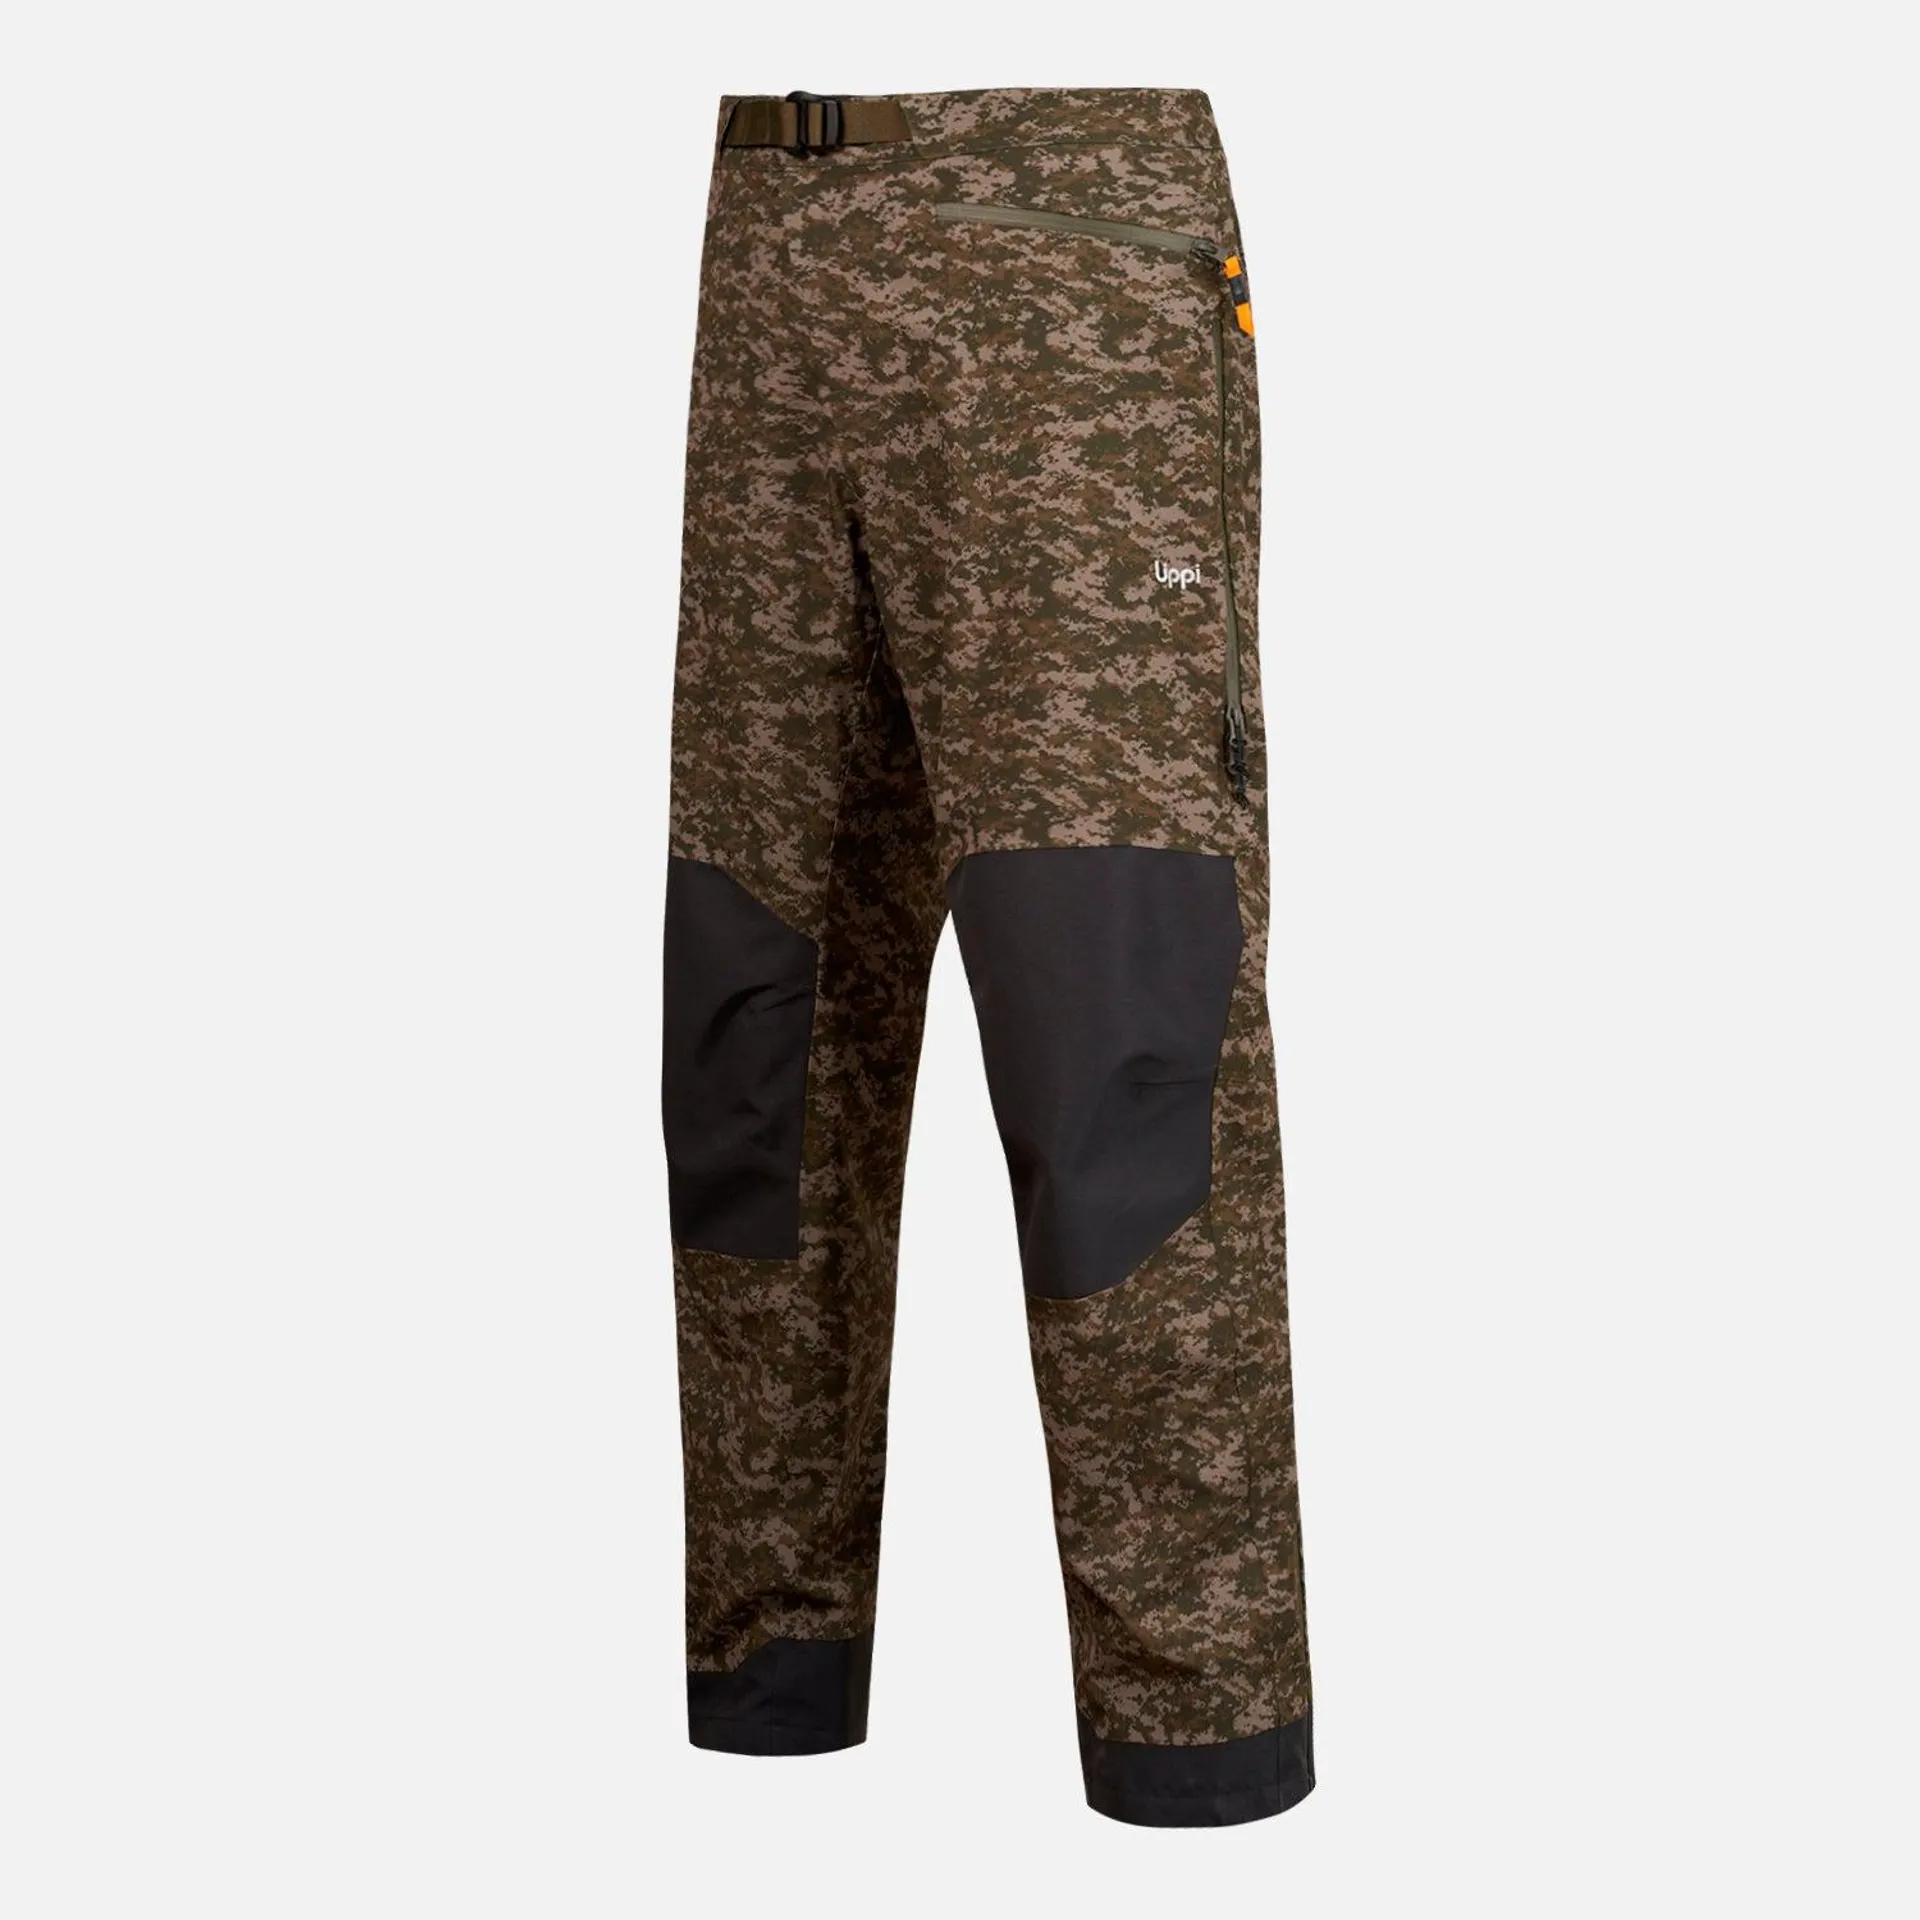 Pantalon Hombre Sierra Nevada B-Dry Light Pants Print Militar Lippi